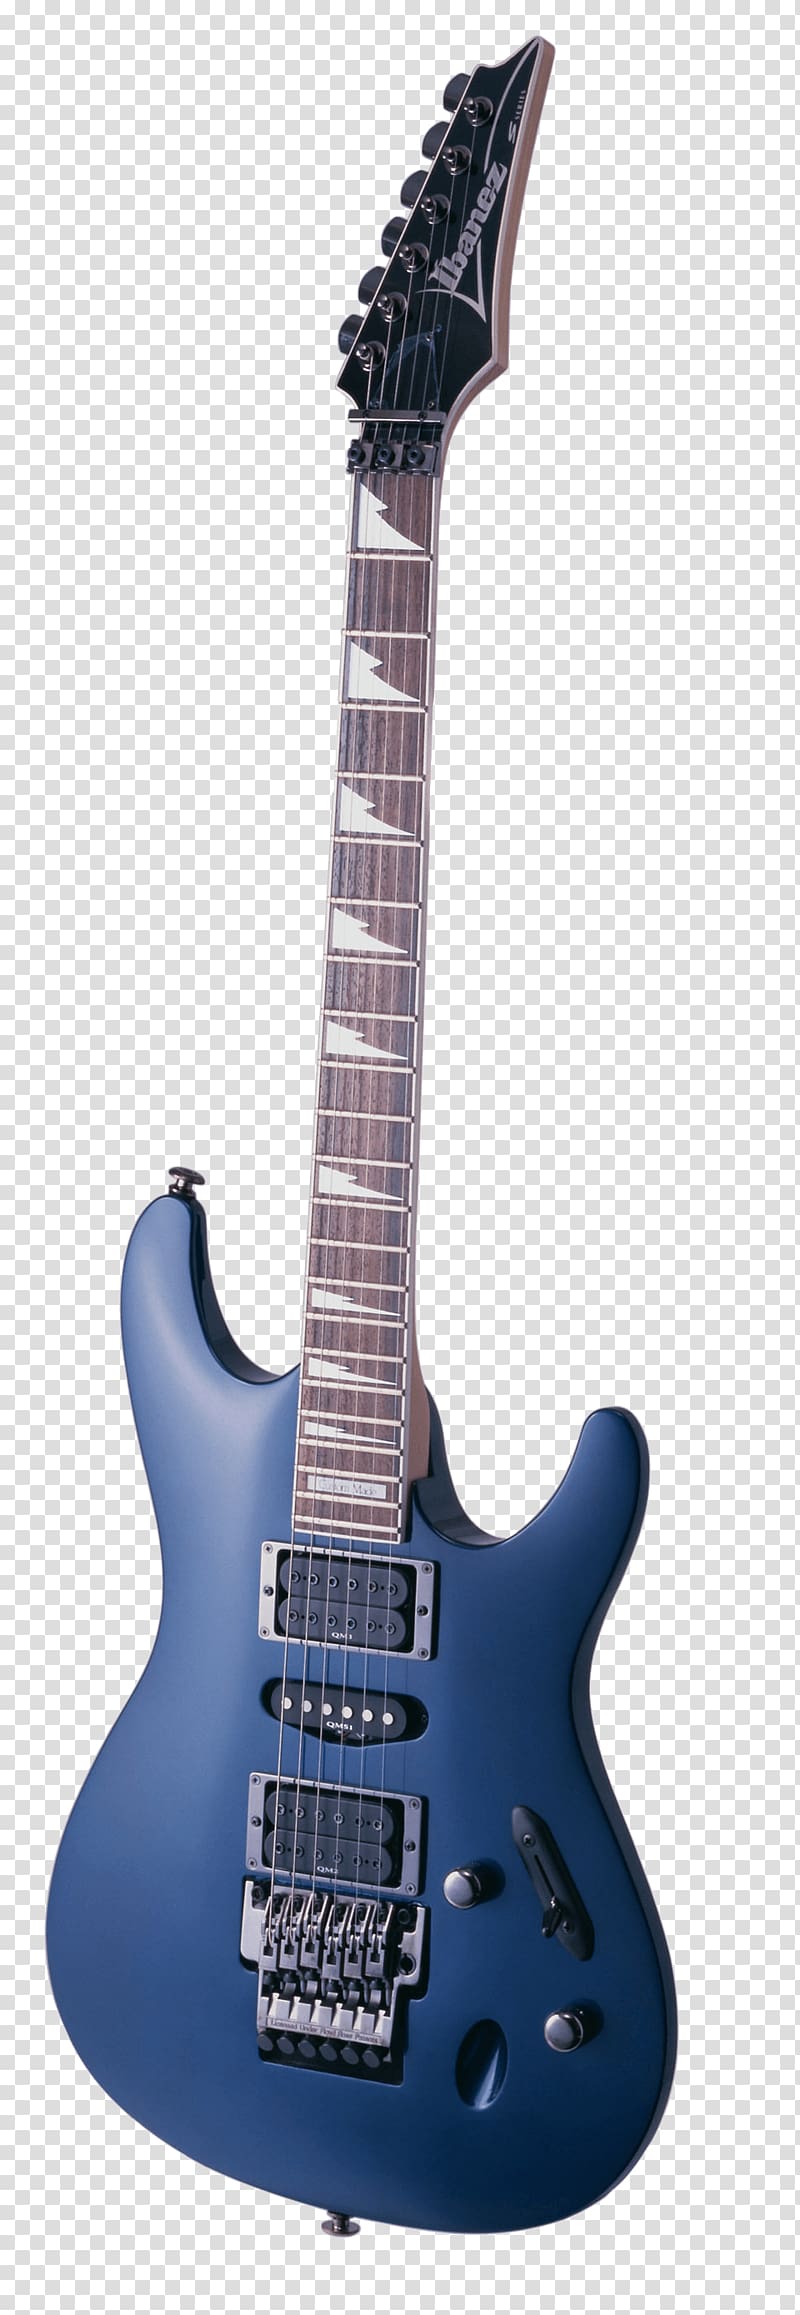 blue Ibanez electric guitar illustration, Ibanez Guitar transparent background PNG clipart